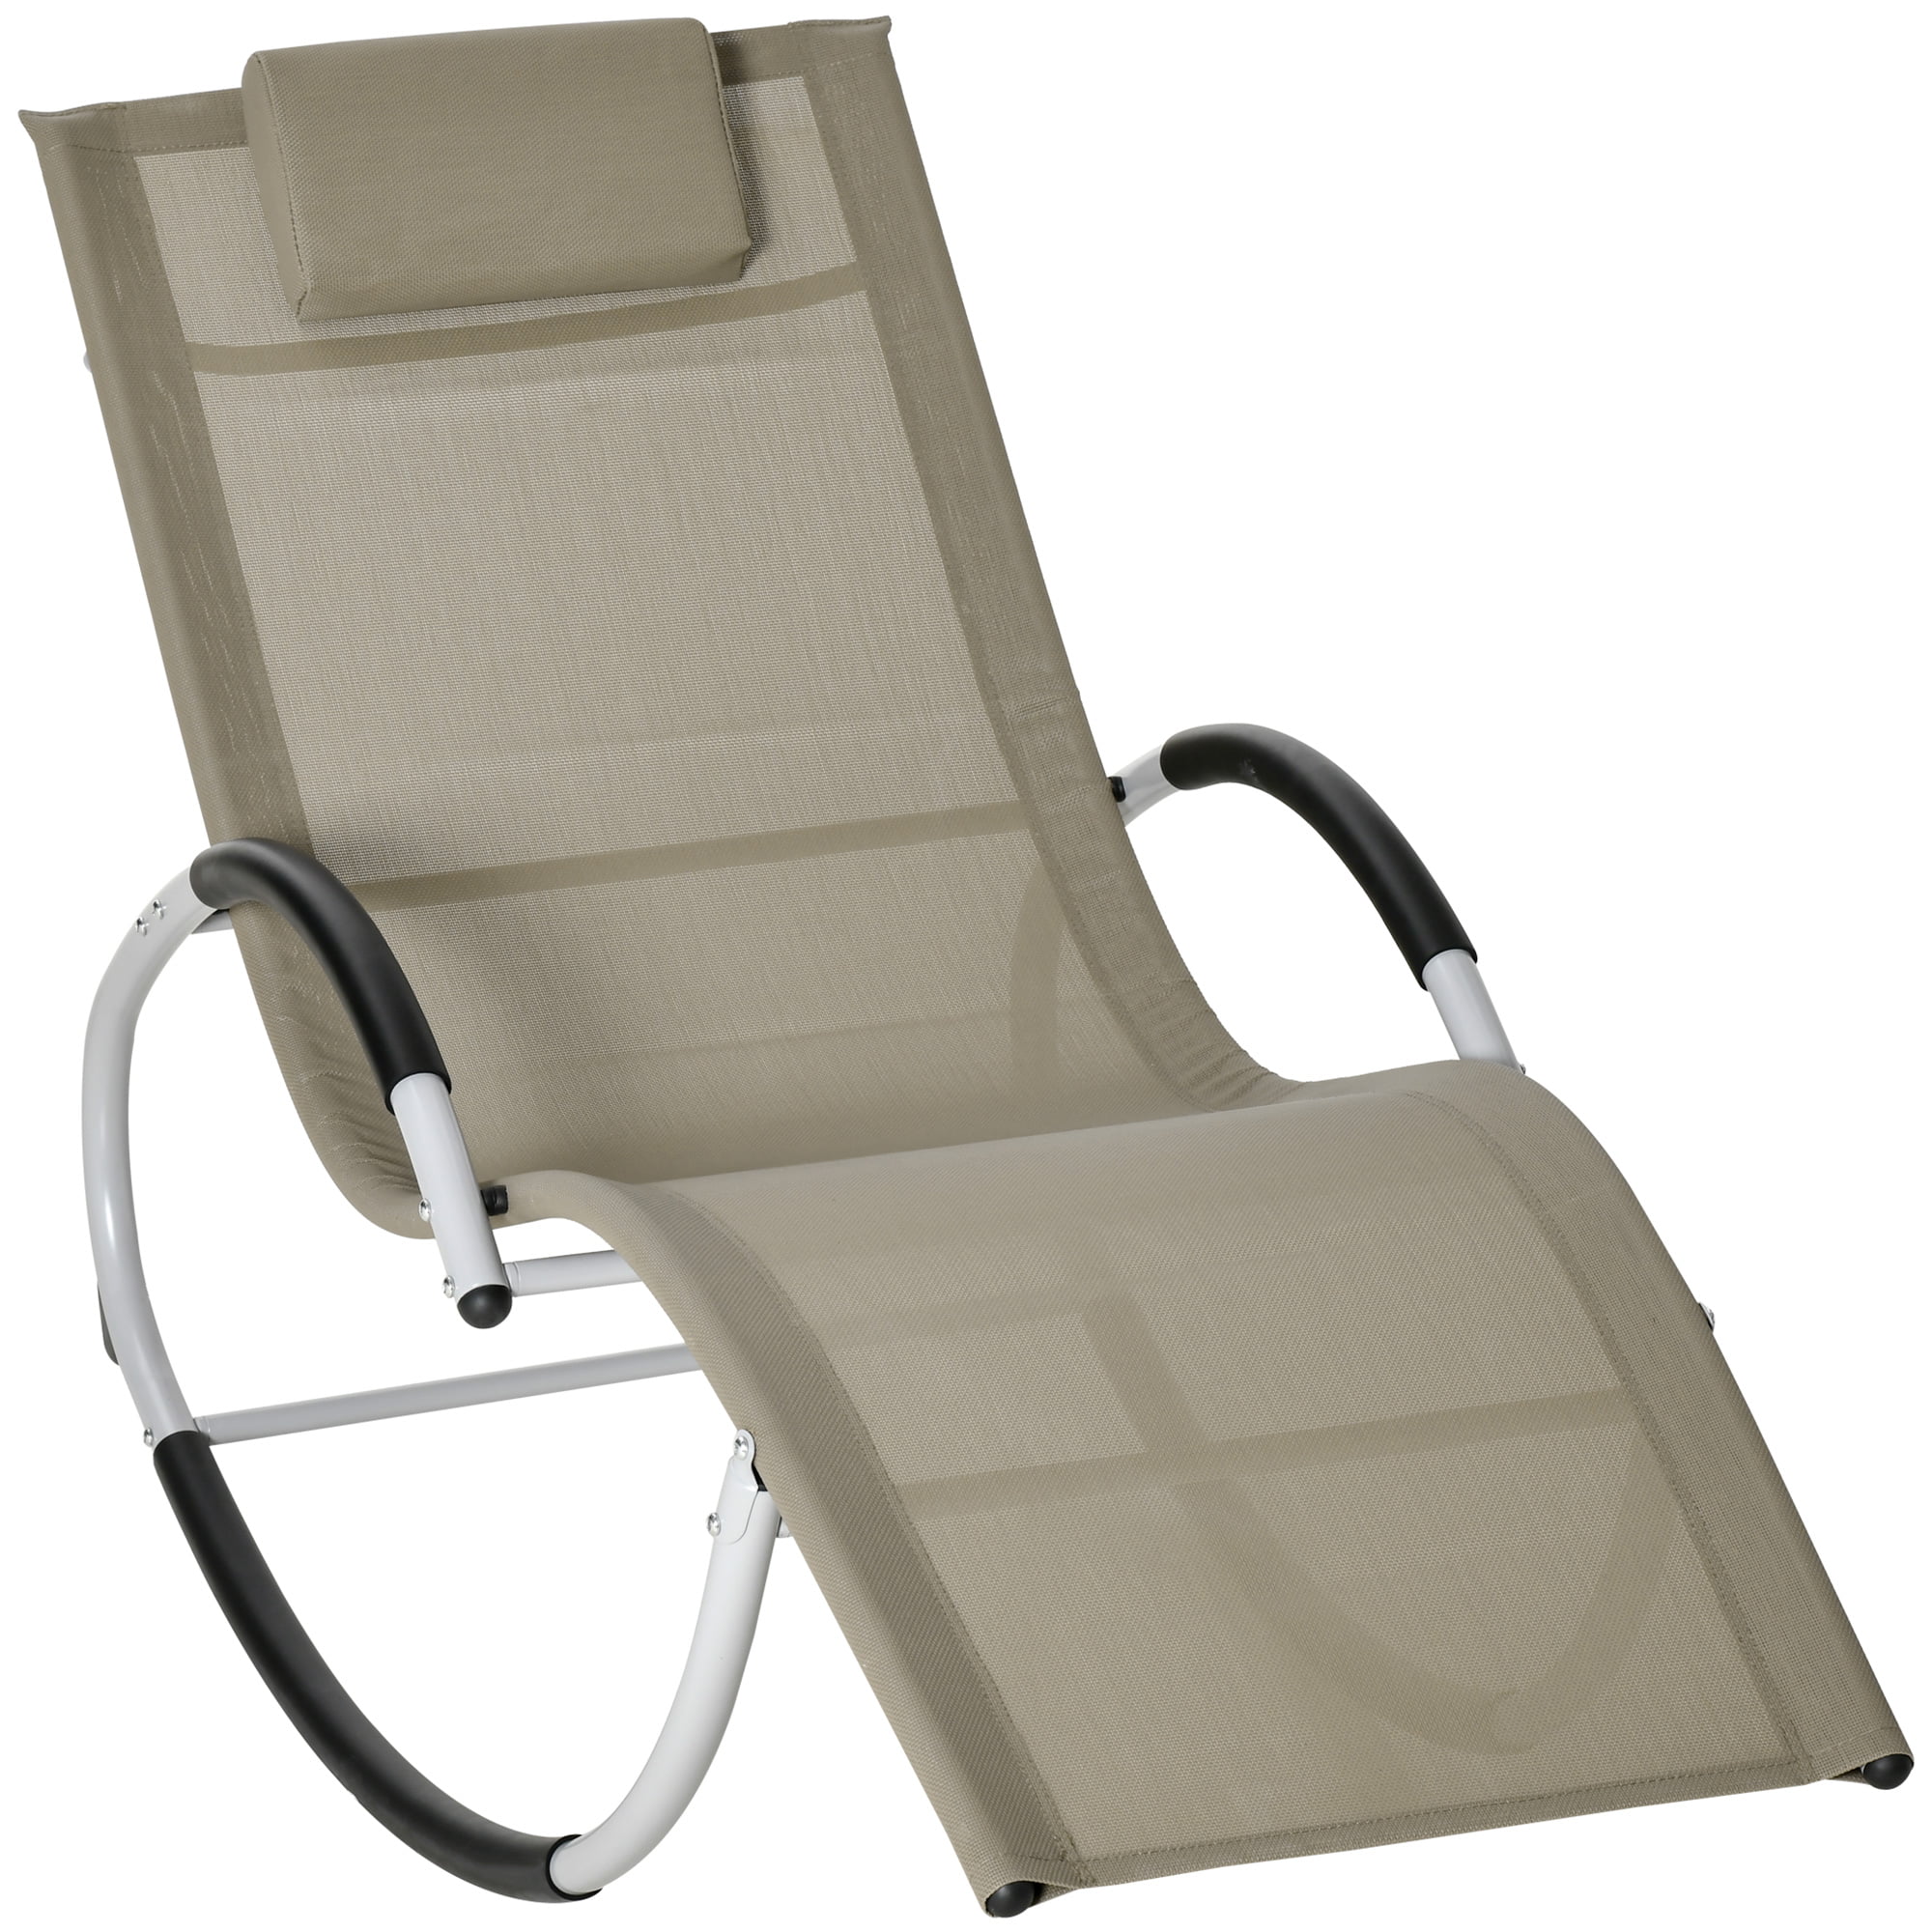 UBesGoo Folding Chaise Lounge Chair Patio Outdoor Pool Beach Lawn 